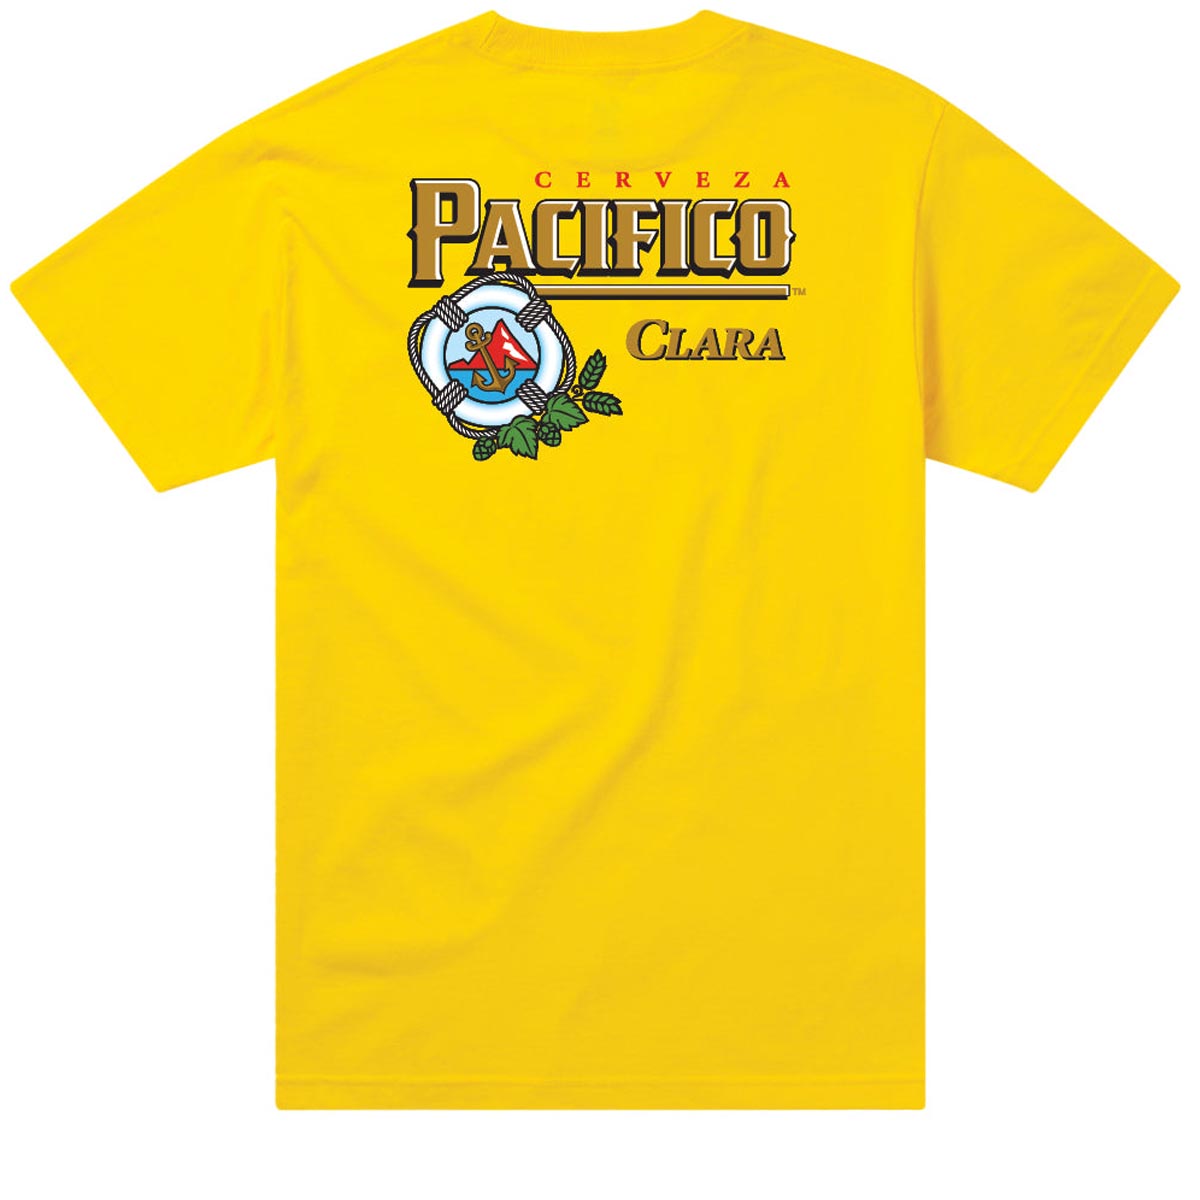 Lakai x Pacifico Cerveza T-Shirt - Yellow image 1